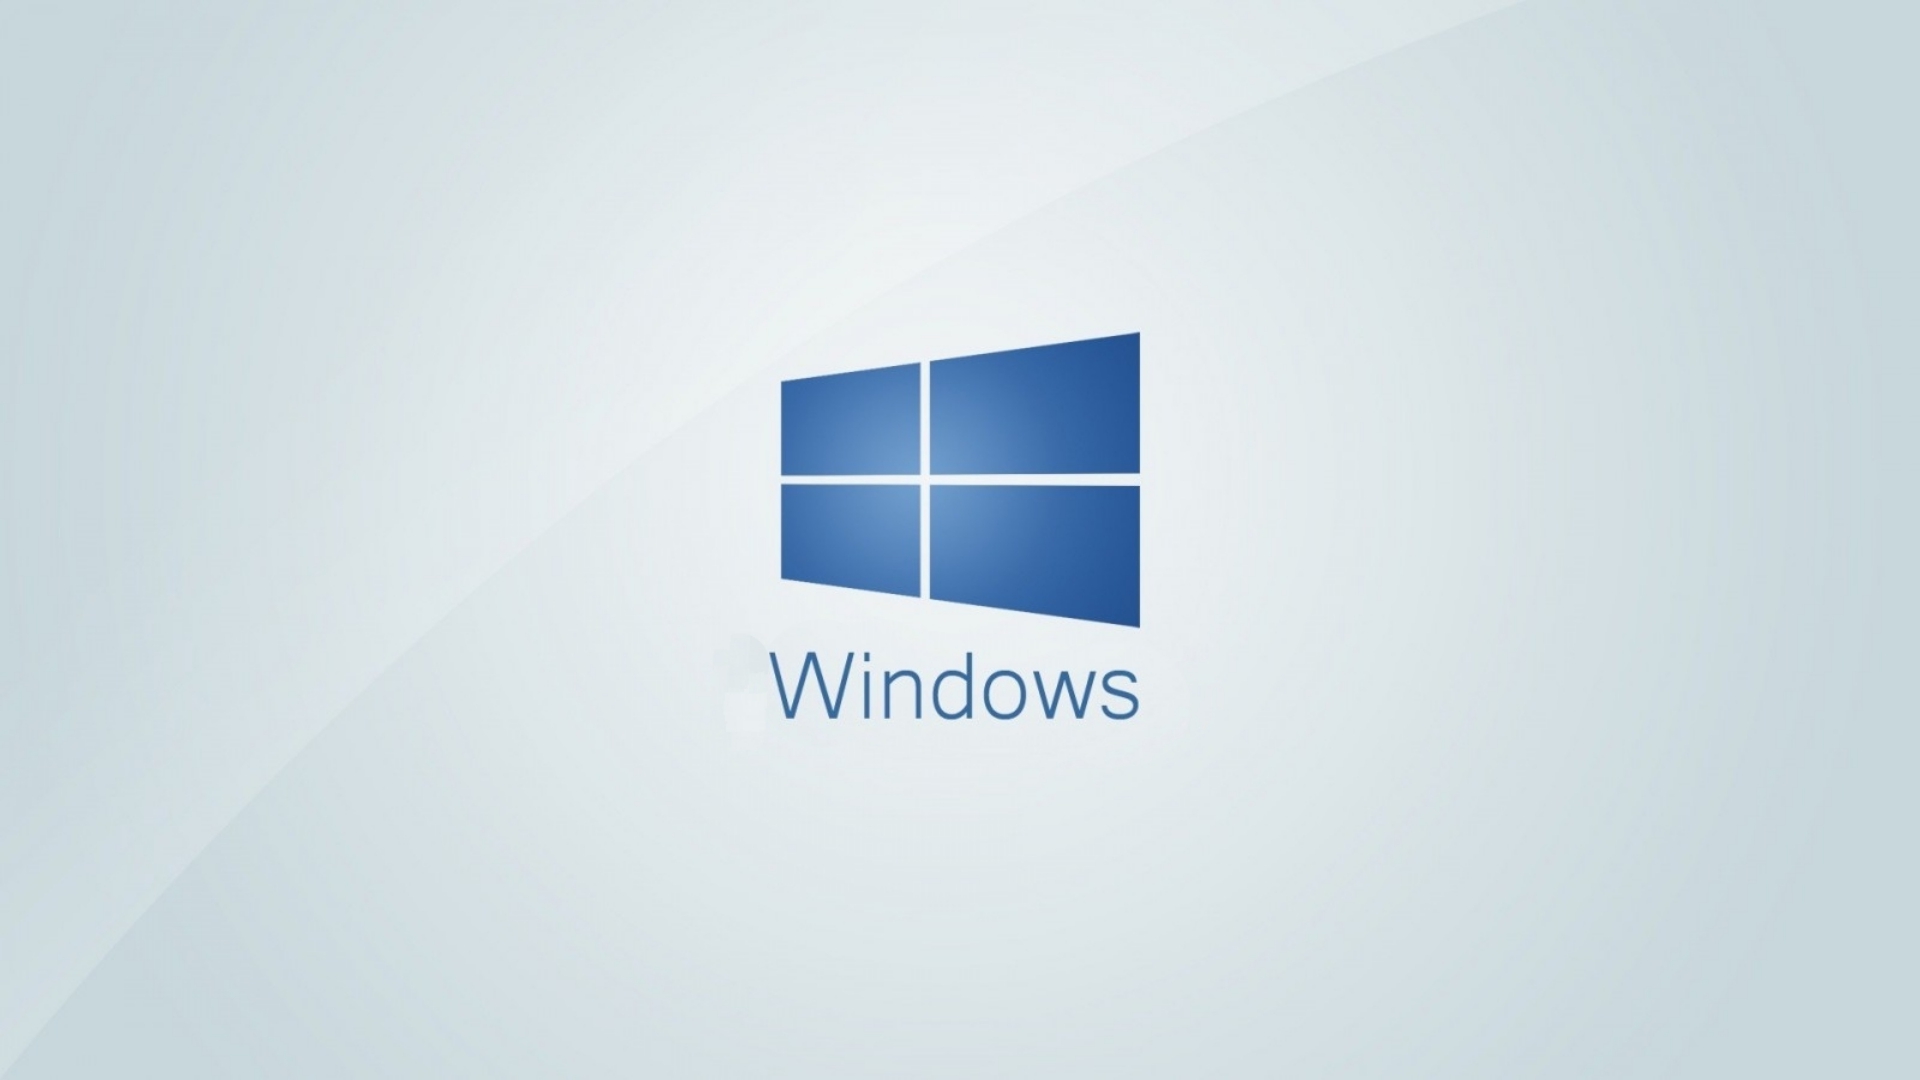 Windows_computer_Microsoft_minimalism_simple_background-1920x1080.jpg